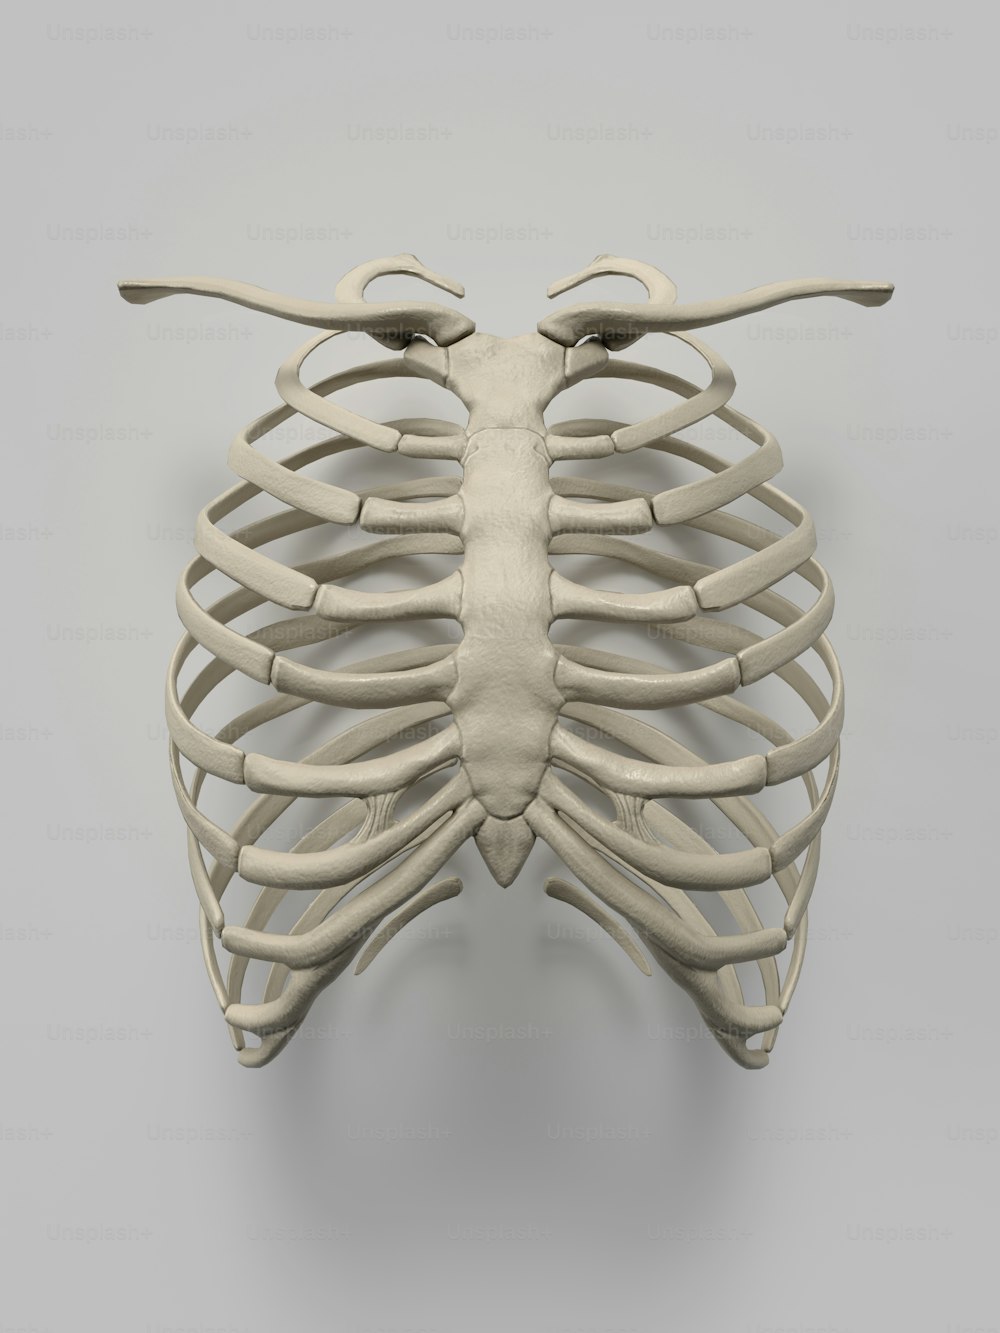 Un modello 3D di una gabbia toracica umana